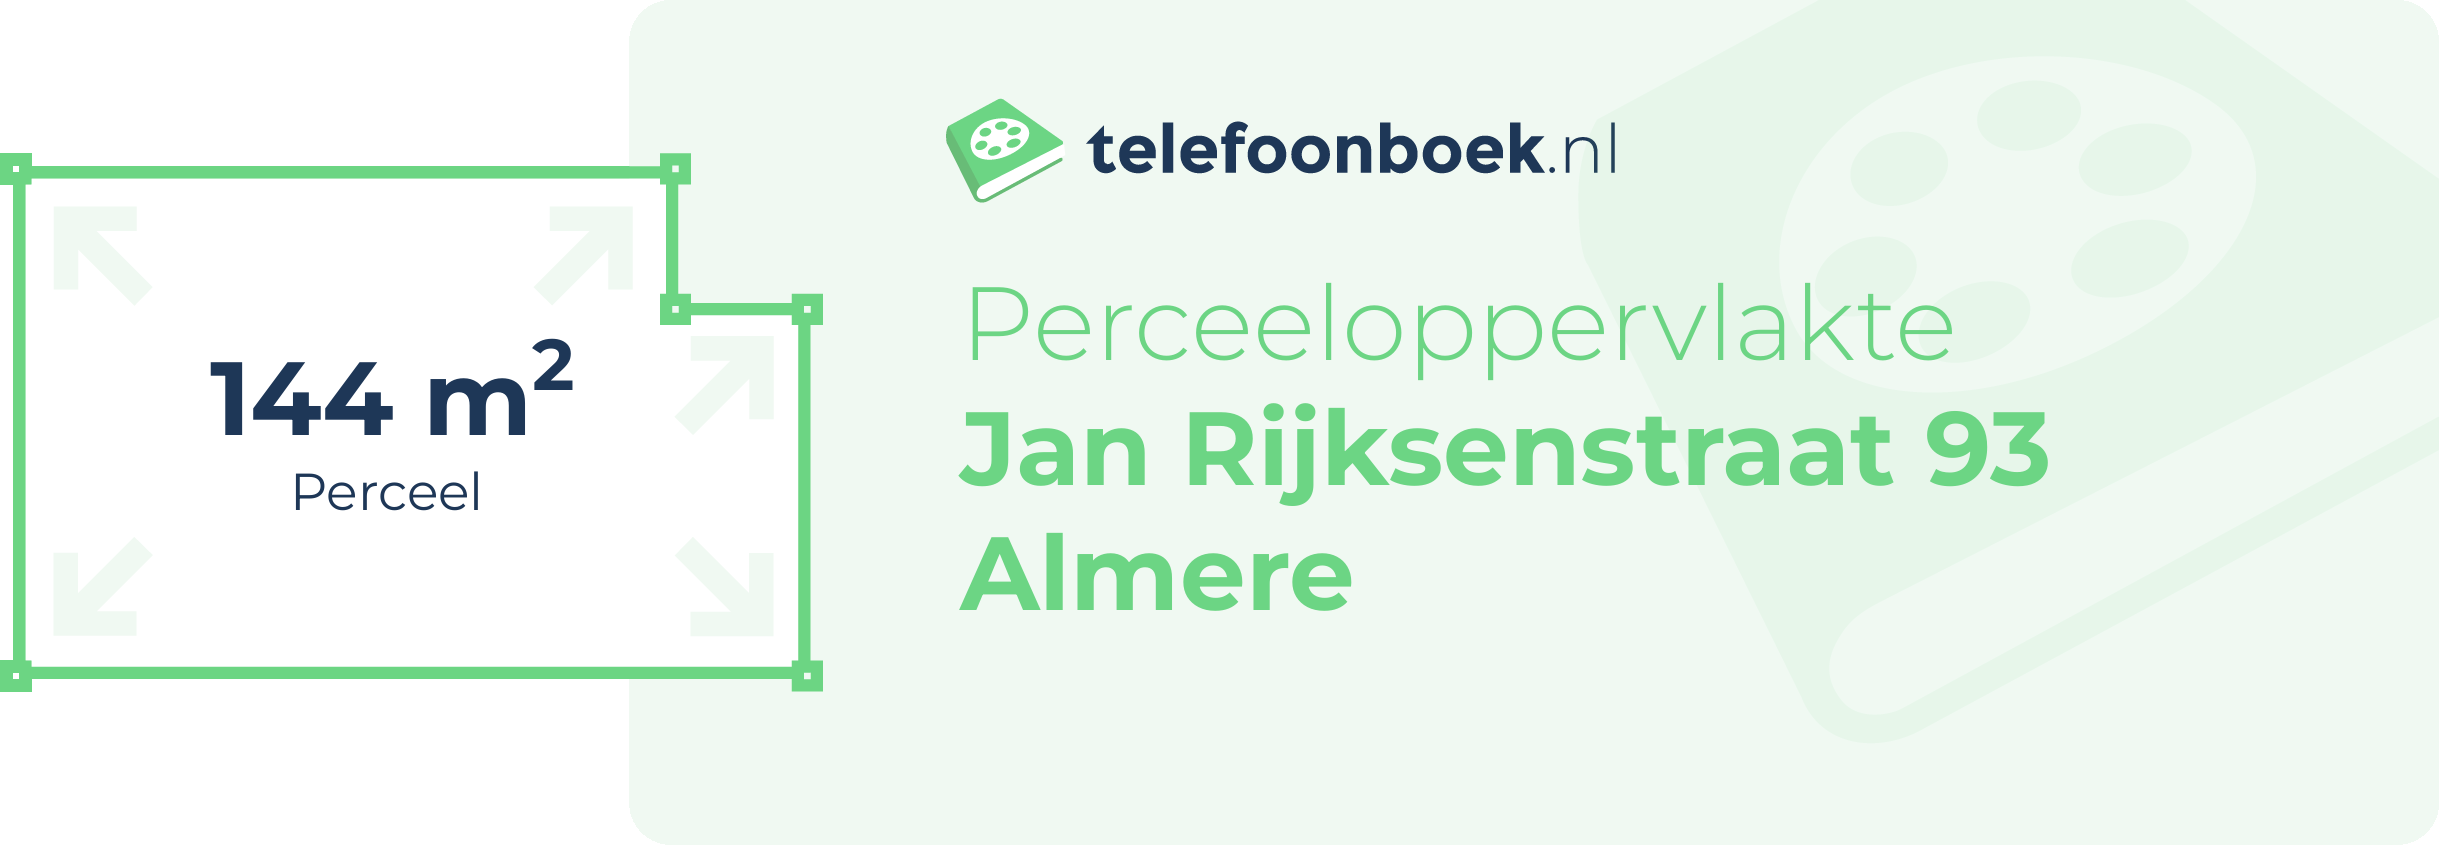 Perceeloppervlakte Jan Rijksenstraat 93 Almere